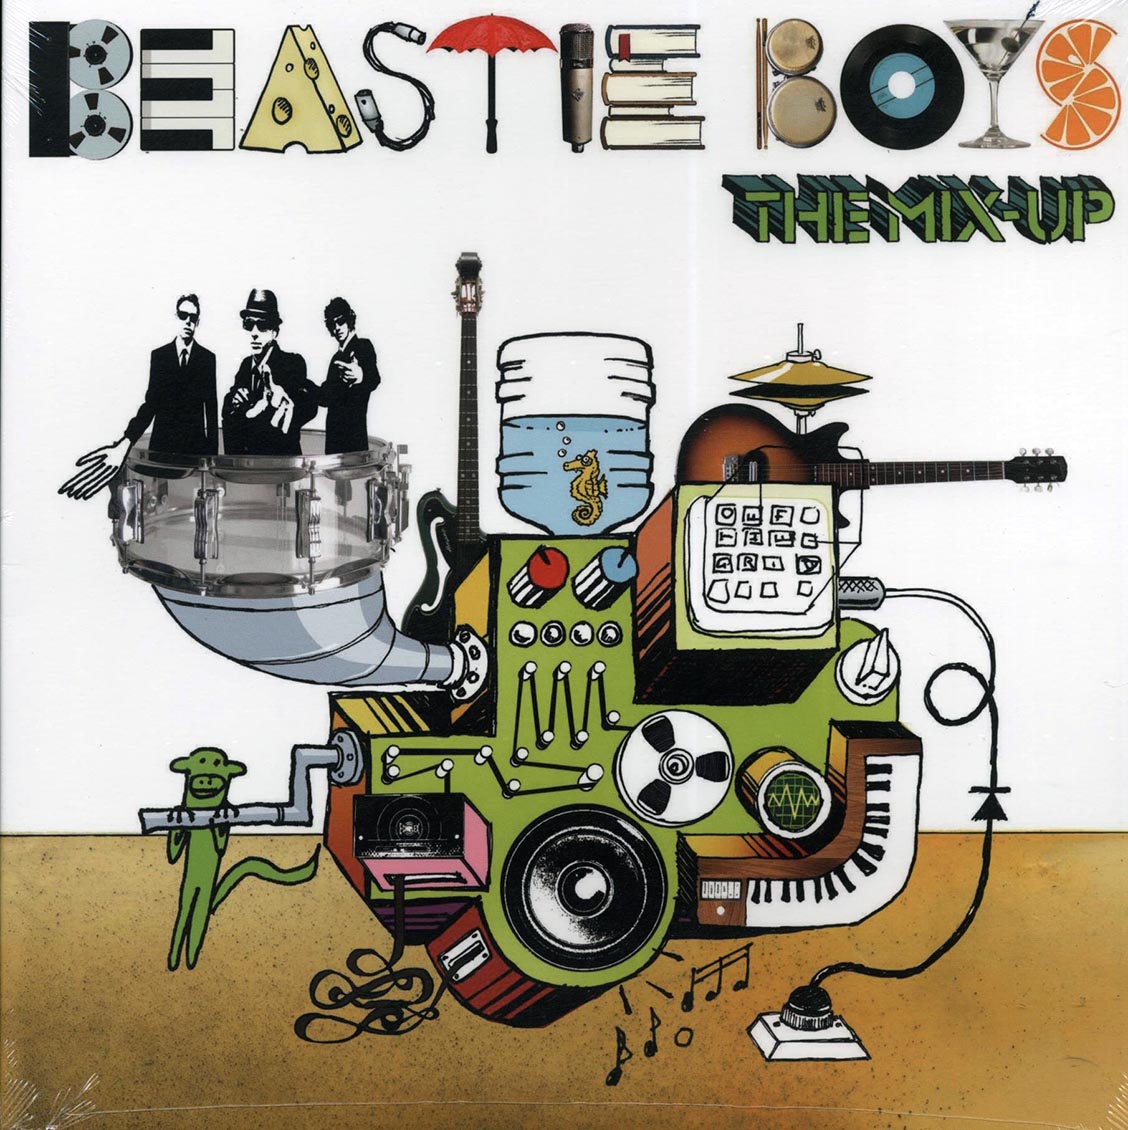 Beastie Boys - The Mix-Up [2007 New Vinyl Record LP]